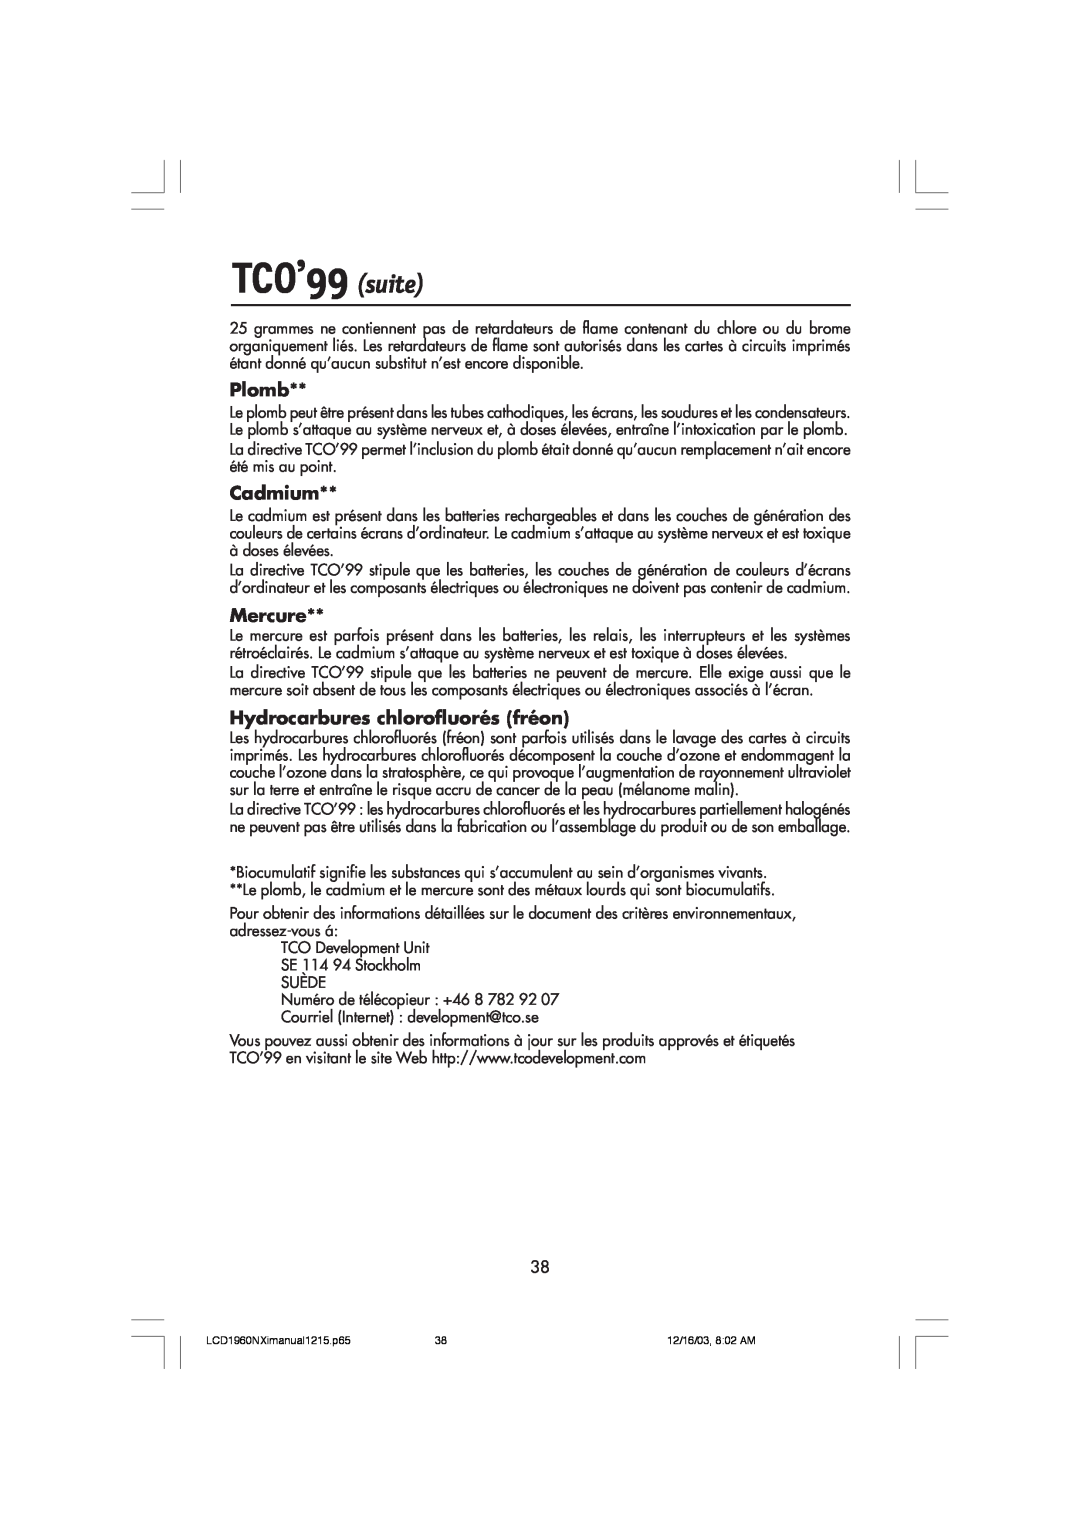 NEC LCD1960NXI manual TCO’99 suite, Plomb, Cadmium, Mercure, Hydrocarbures chlorofluorés fréon 